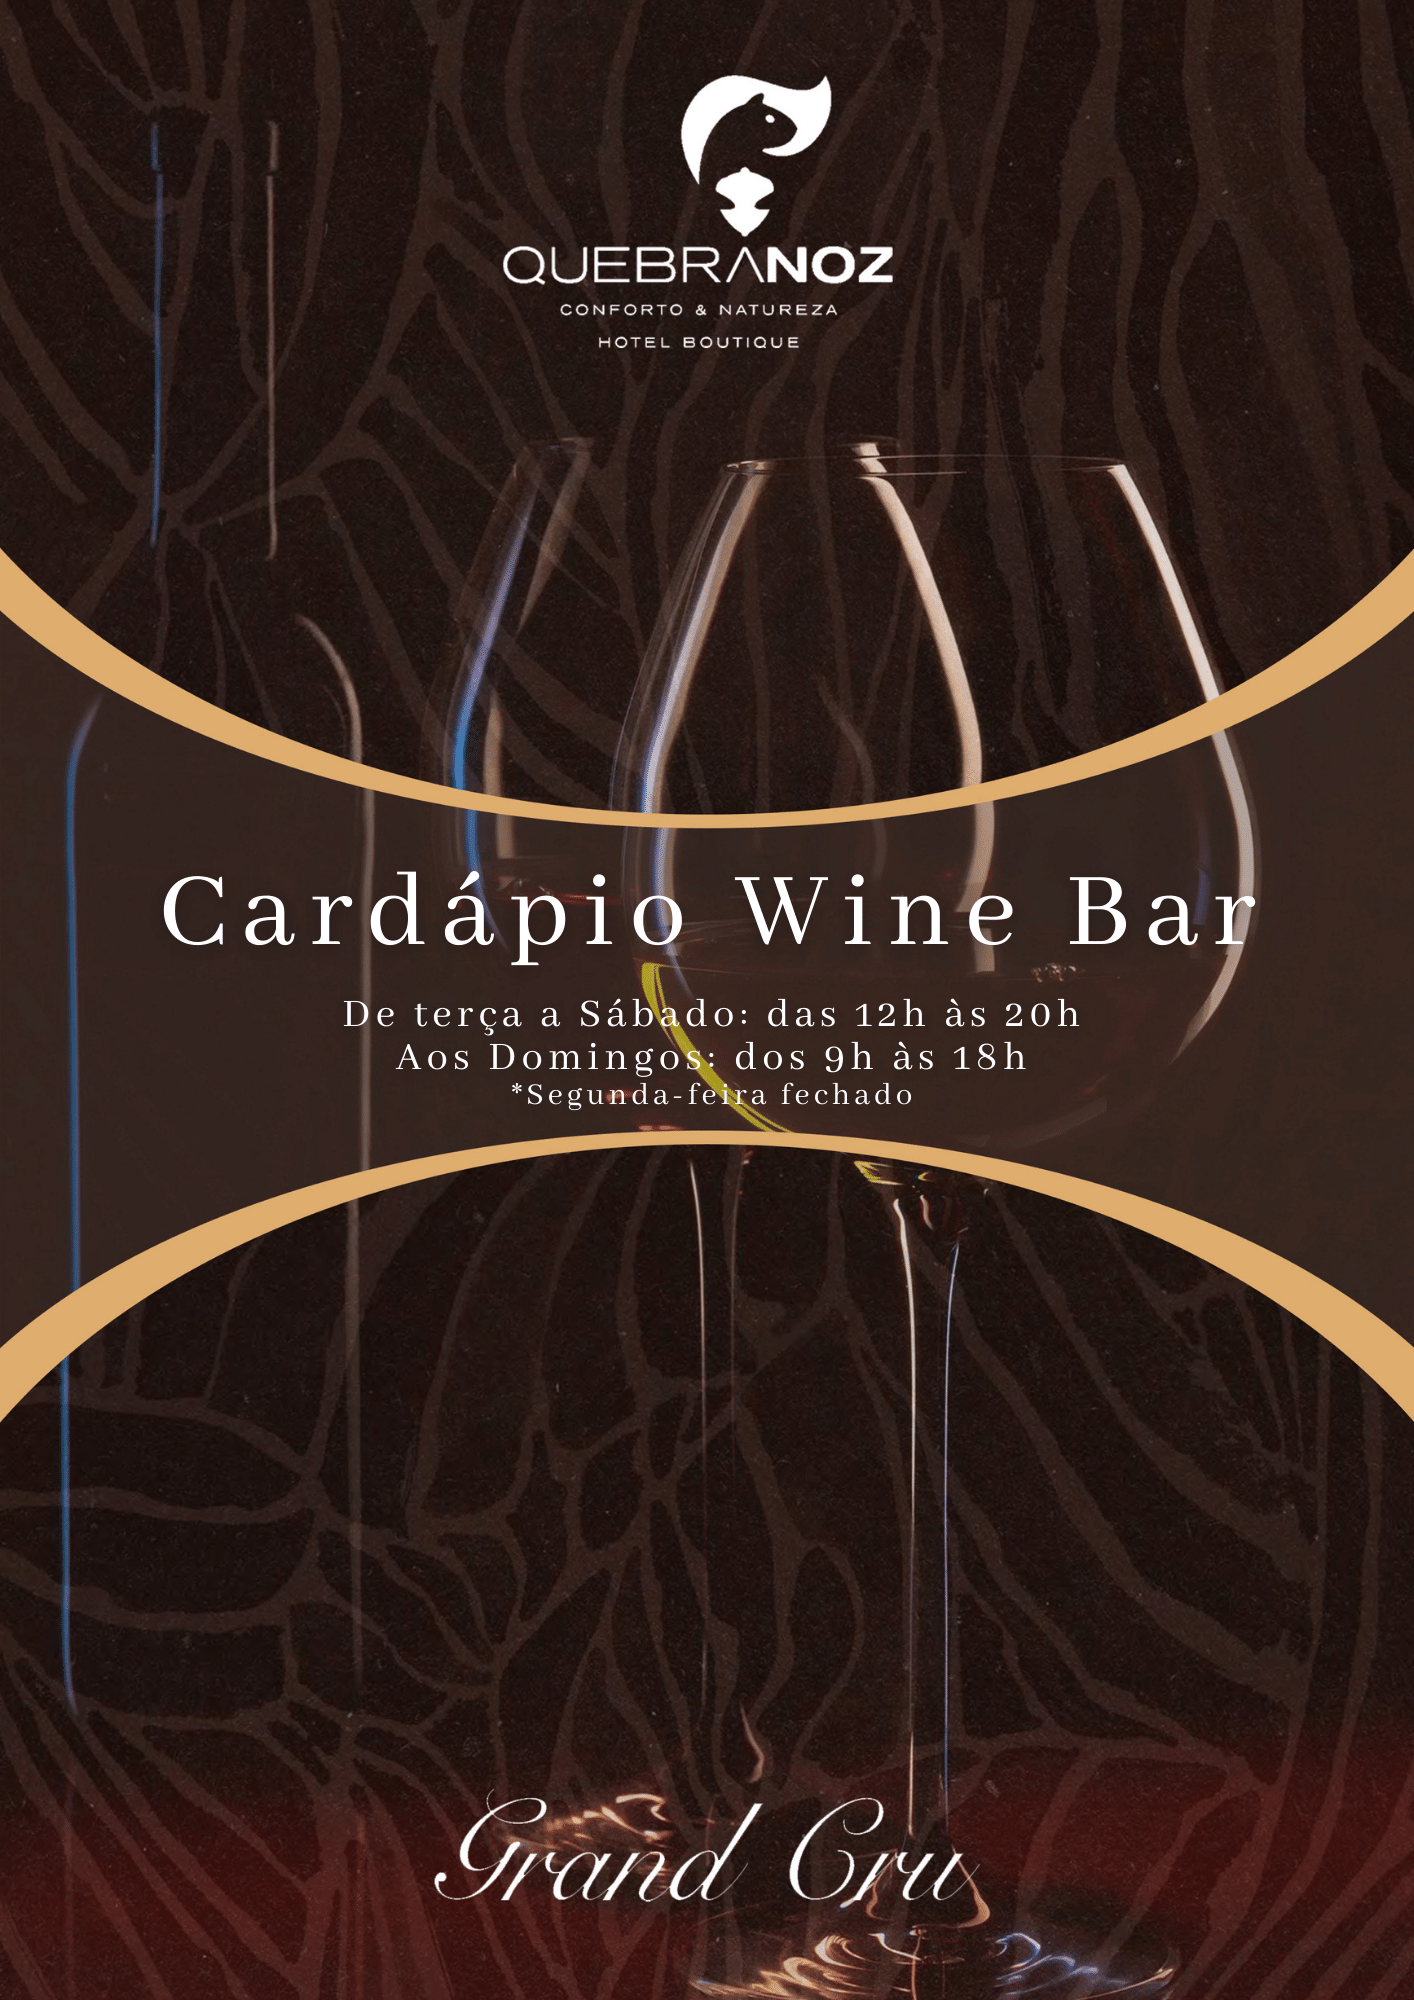 Cardápio Wine Bar - Hotel Quebra-Noz 1